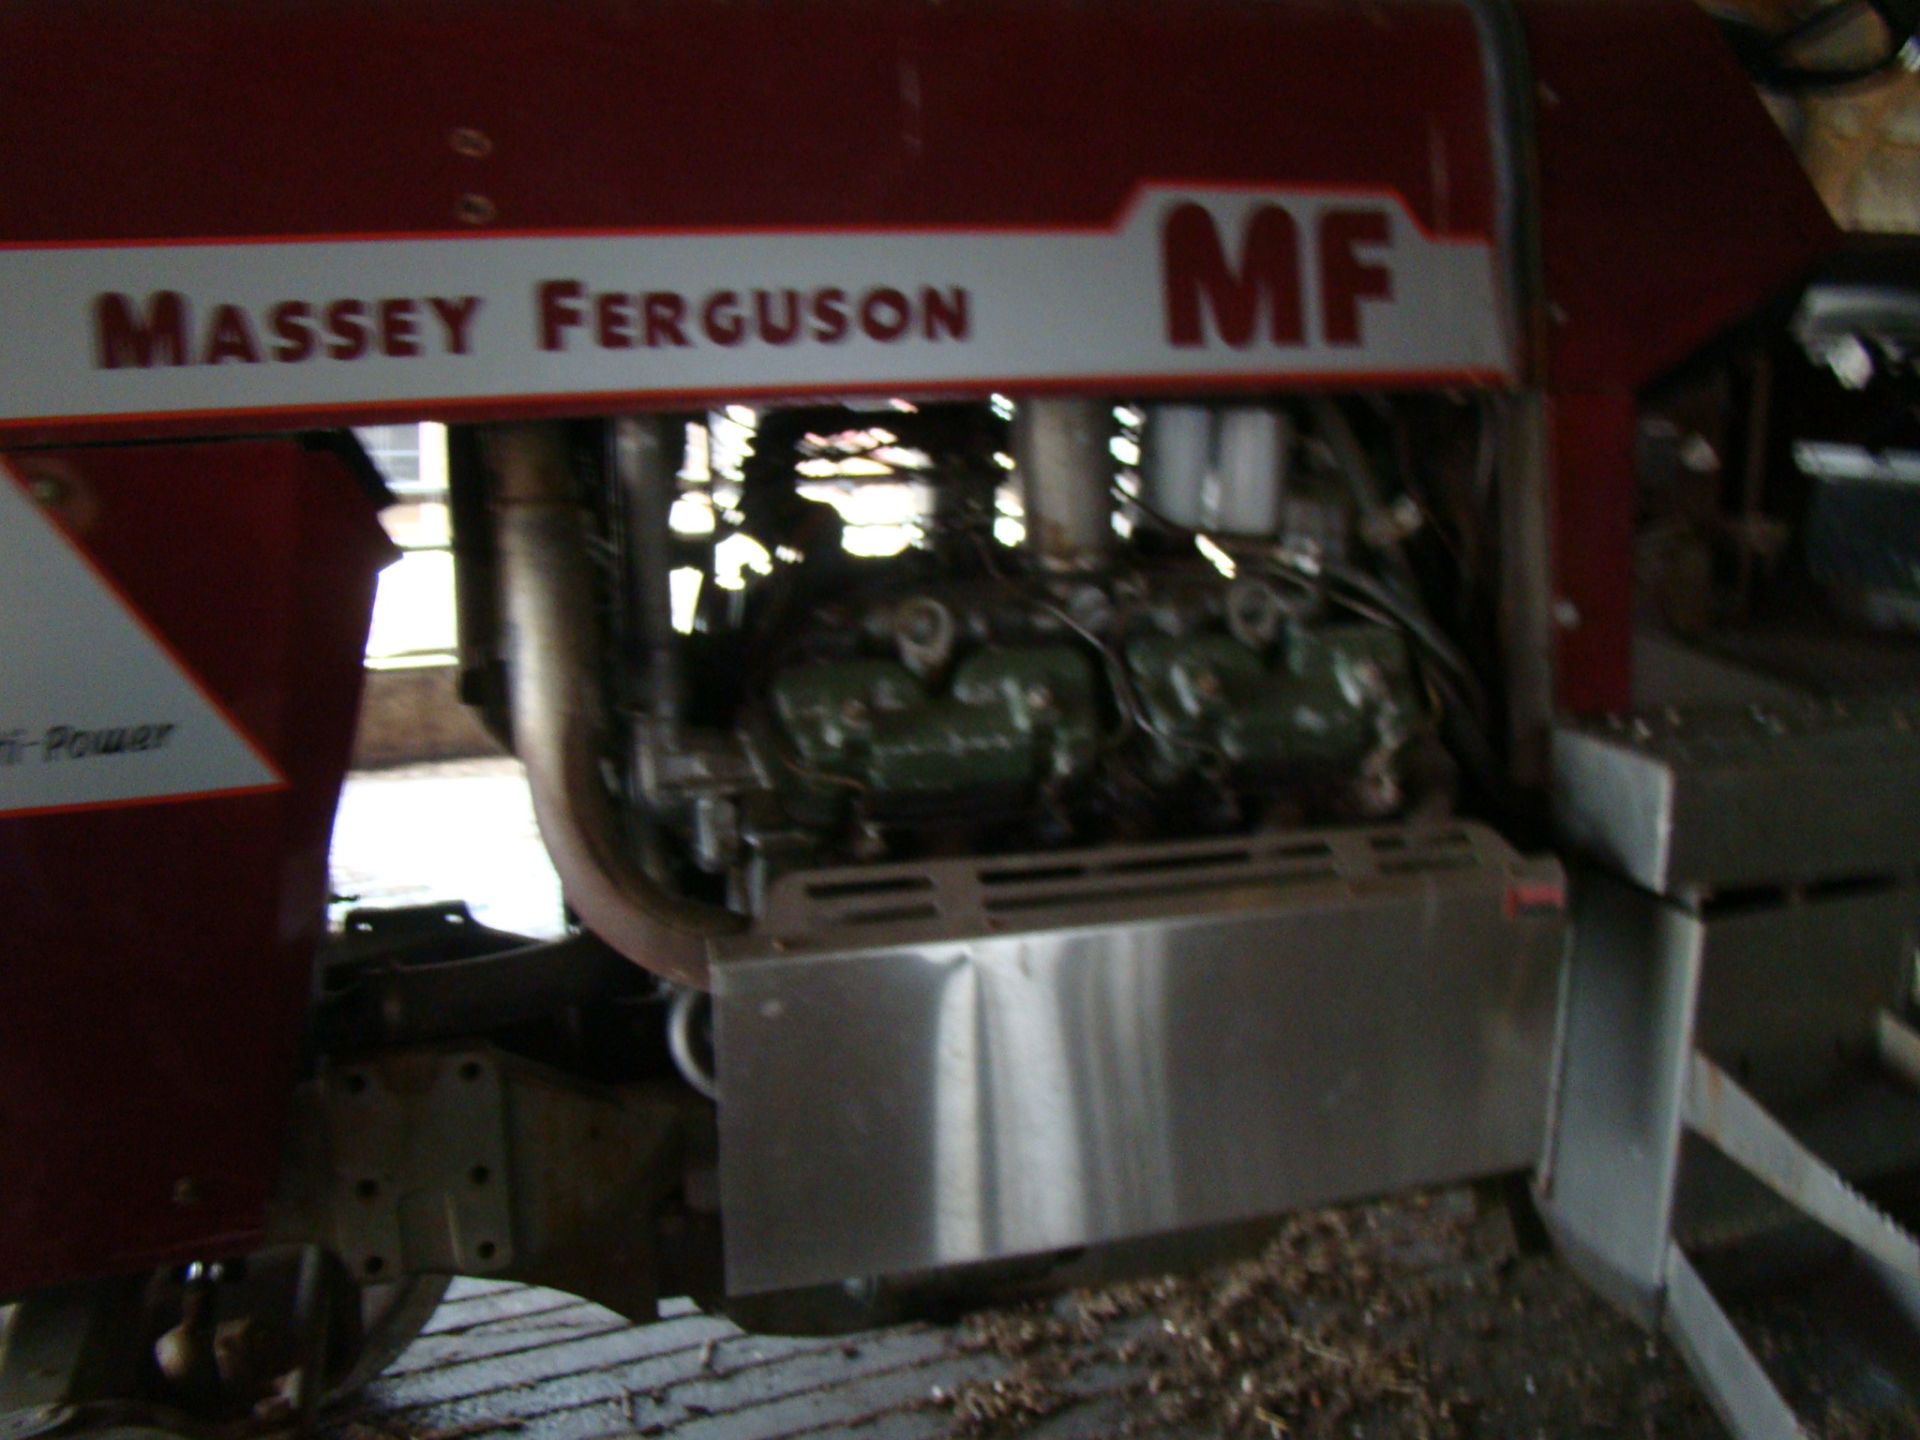 Massey Ferguson 1155 pulling tractor runs - Image 20 of 24